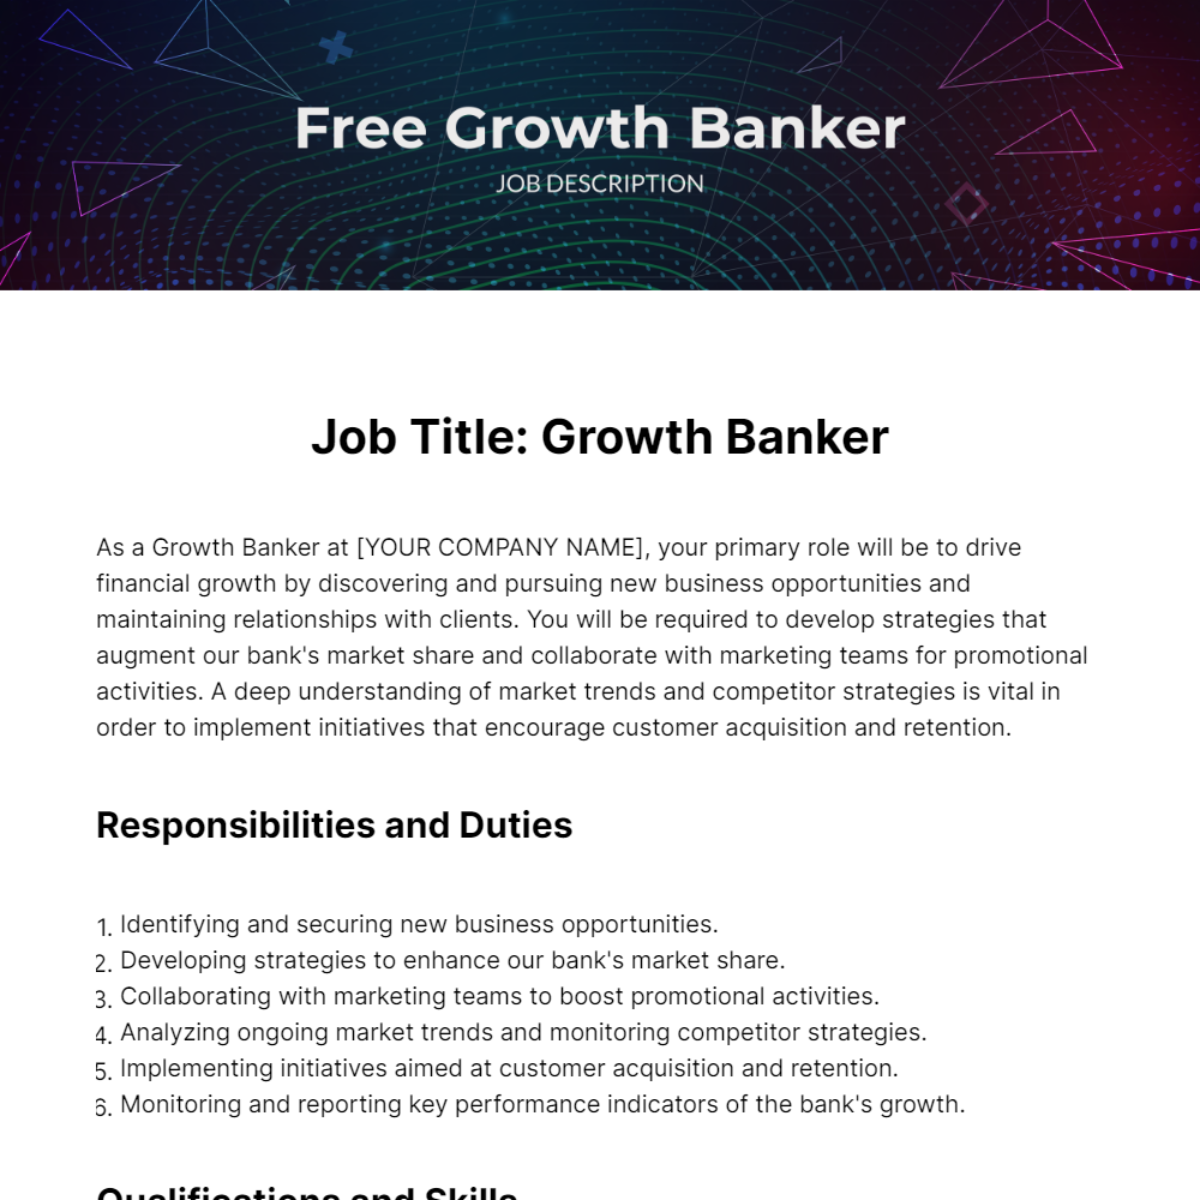 Free Growth Banker Job Description Template